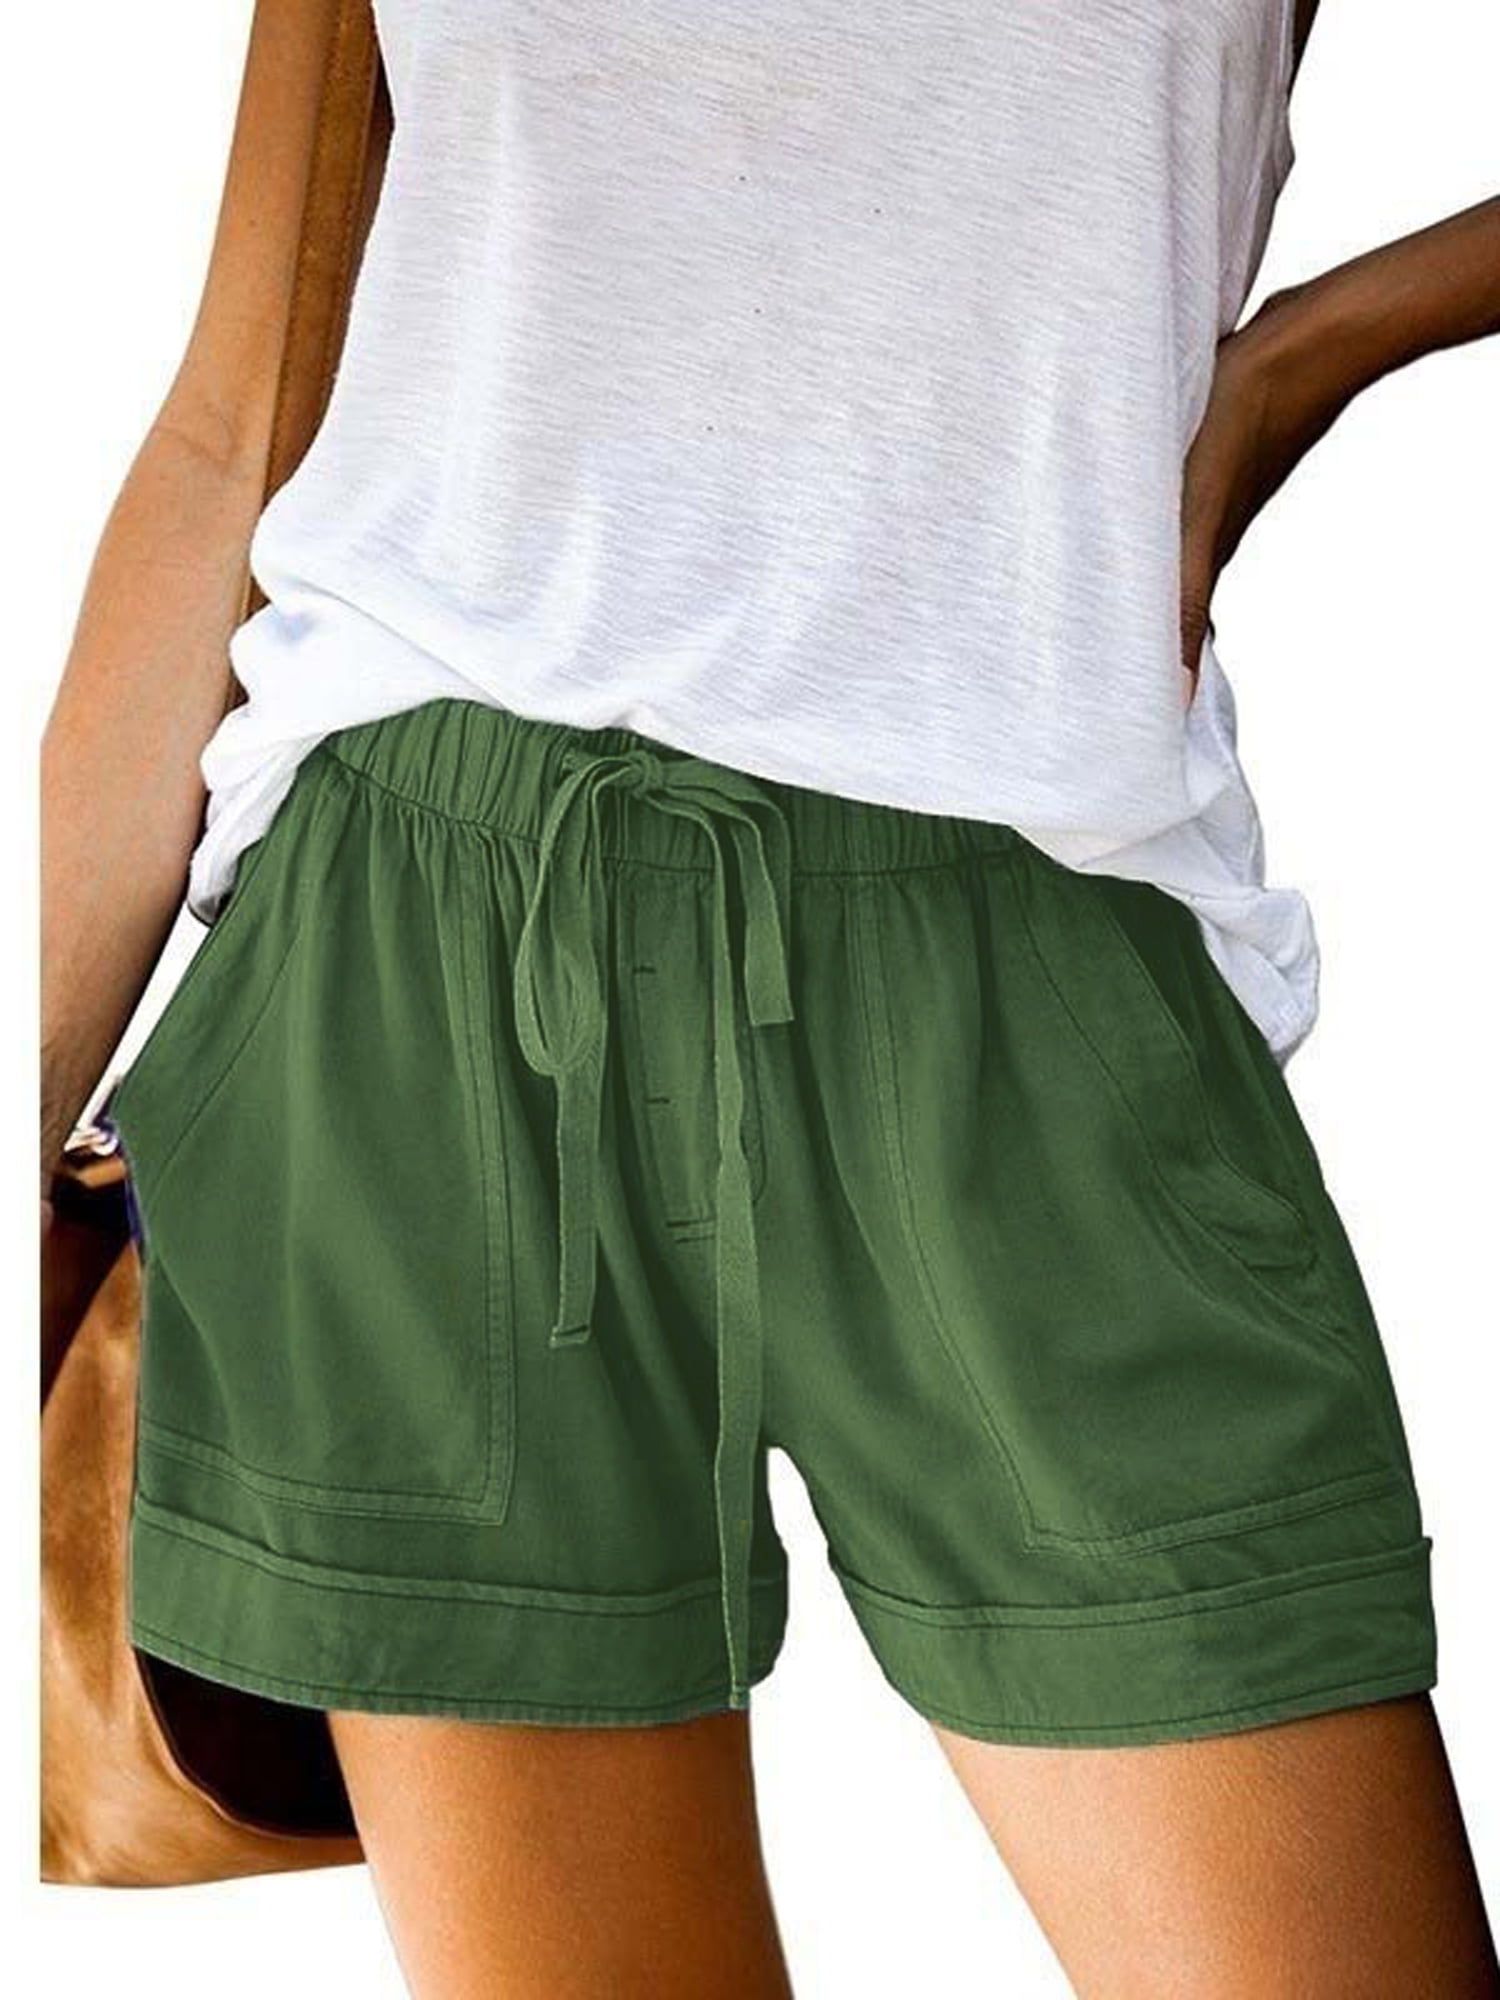 Plus Size Womens Summer Elastic Waist Shorts Ladies Baggy Short Pants 